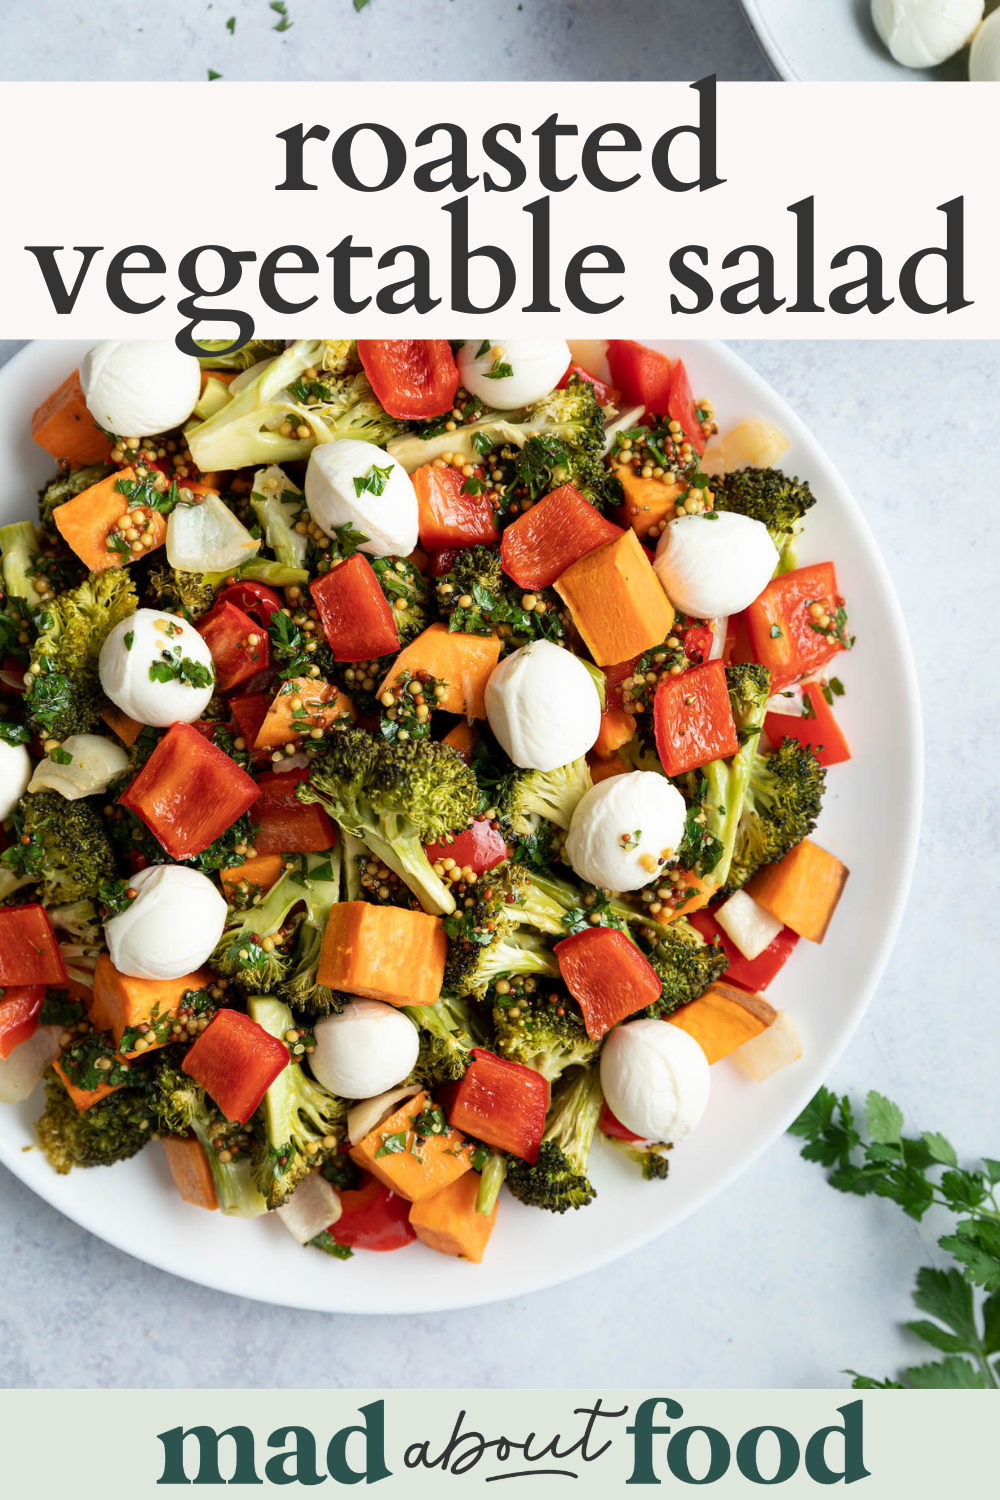 Image for pinning roasted vegetable salad recipe on pinterest